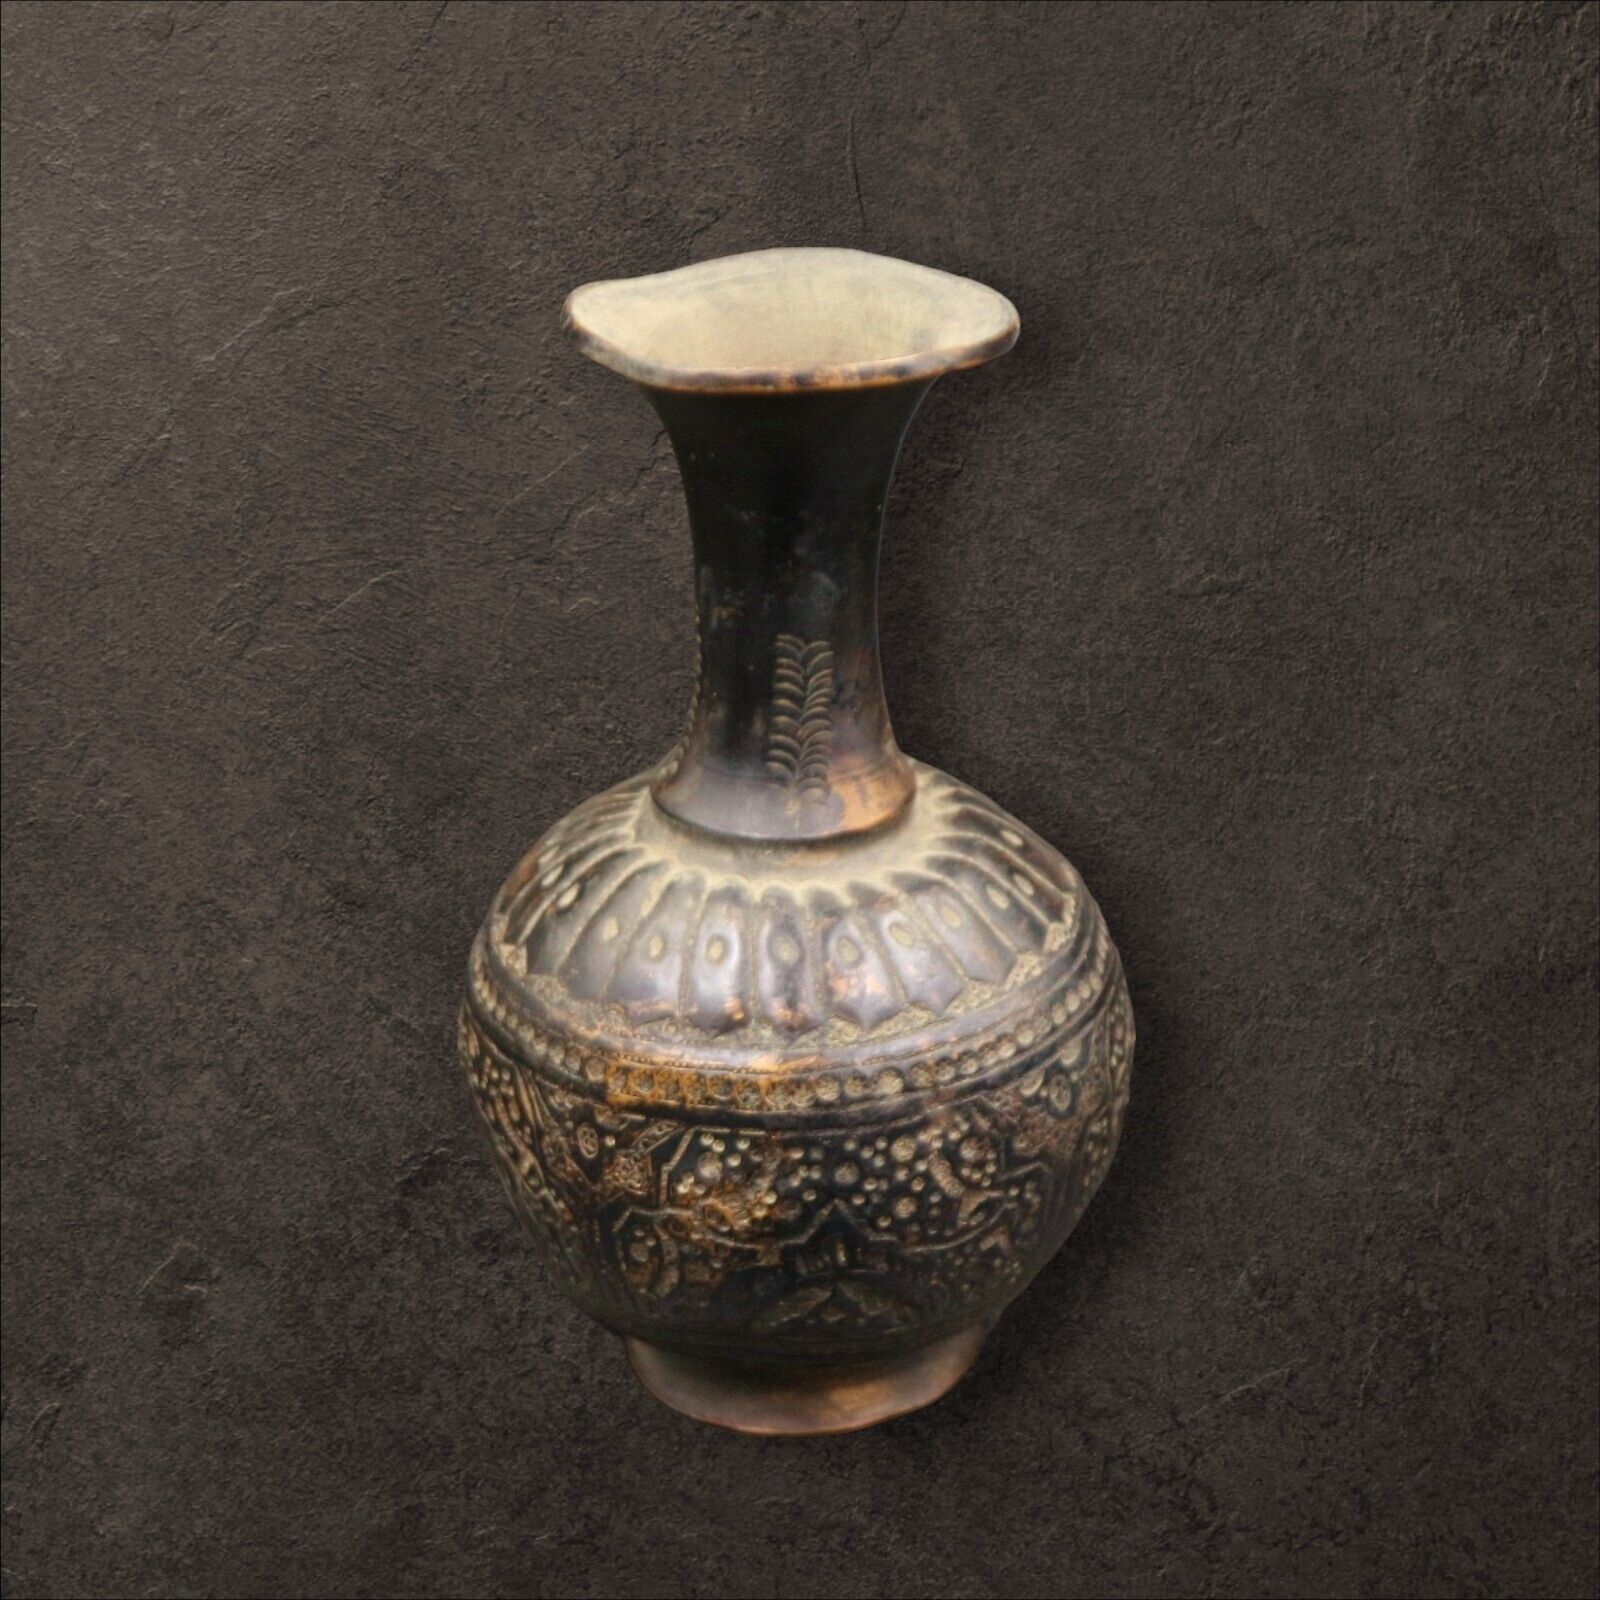 Unique Antique Egyptian Islamic Brass Flower Vase Engraved Decorative Arabic Art